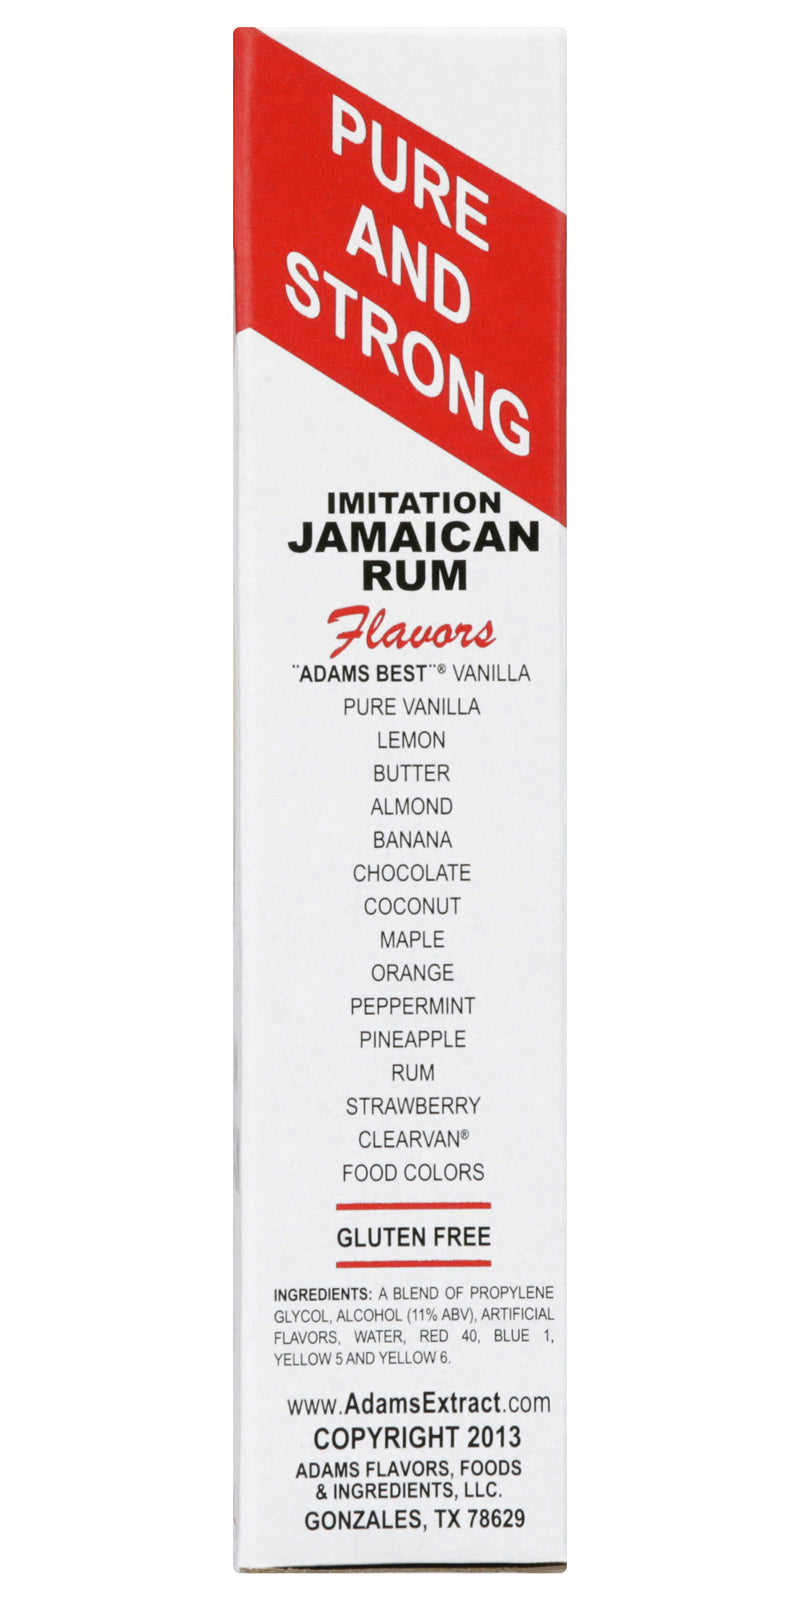 Adams Extract Imitation Jamaican Rum Flavor, Extra Strength, Gluten Free, 1.5 FL OZ Glass Bottle (Pack of 1)